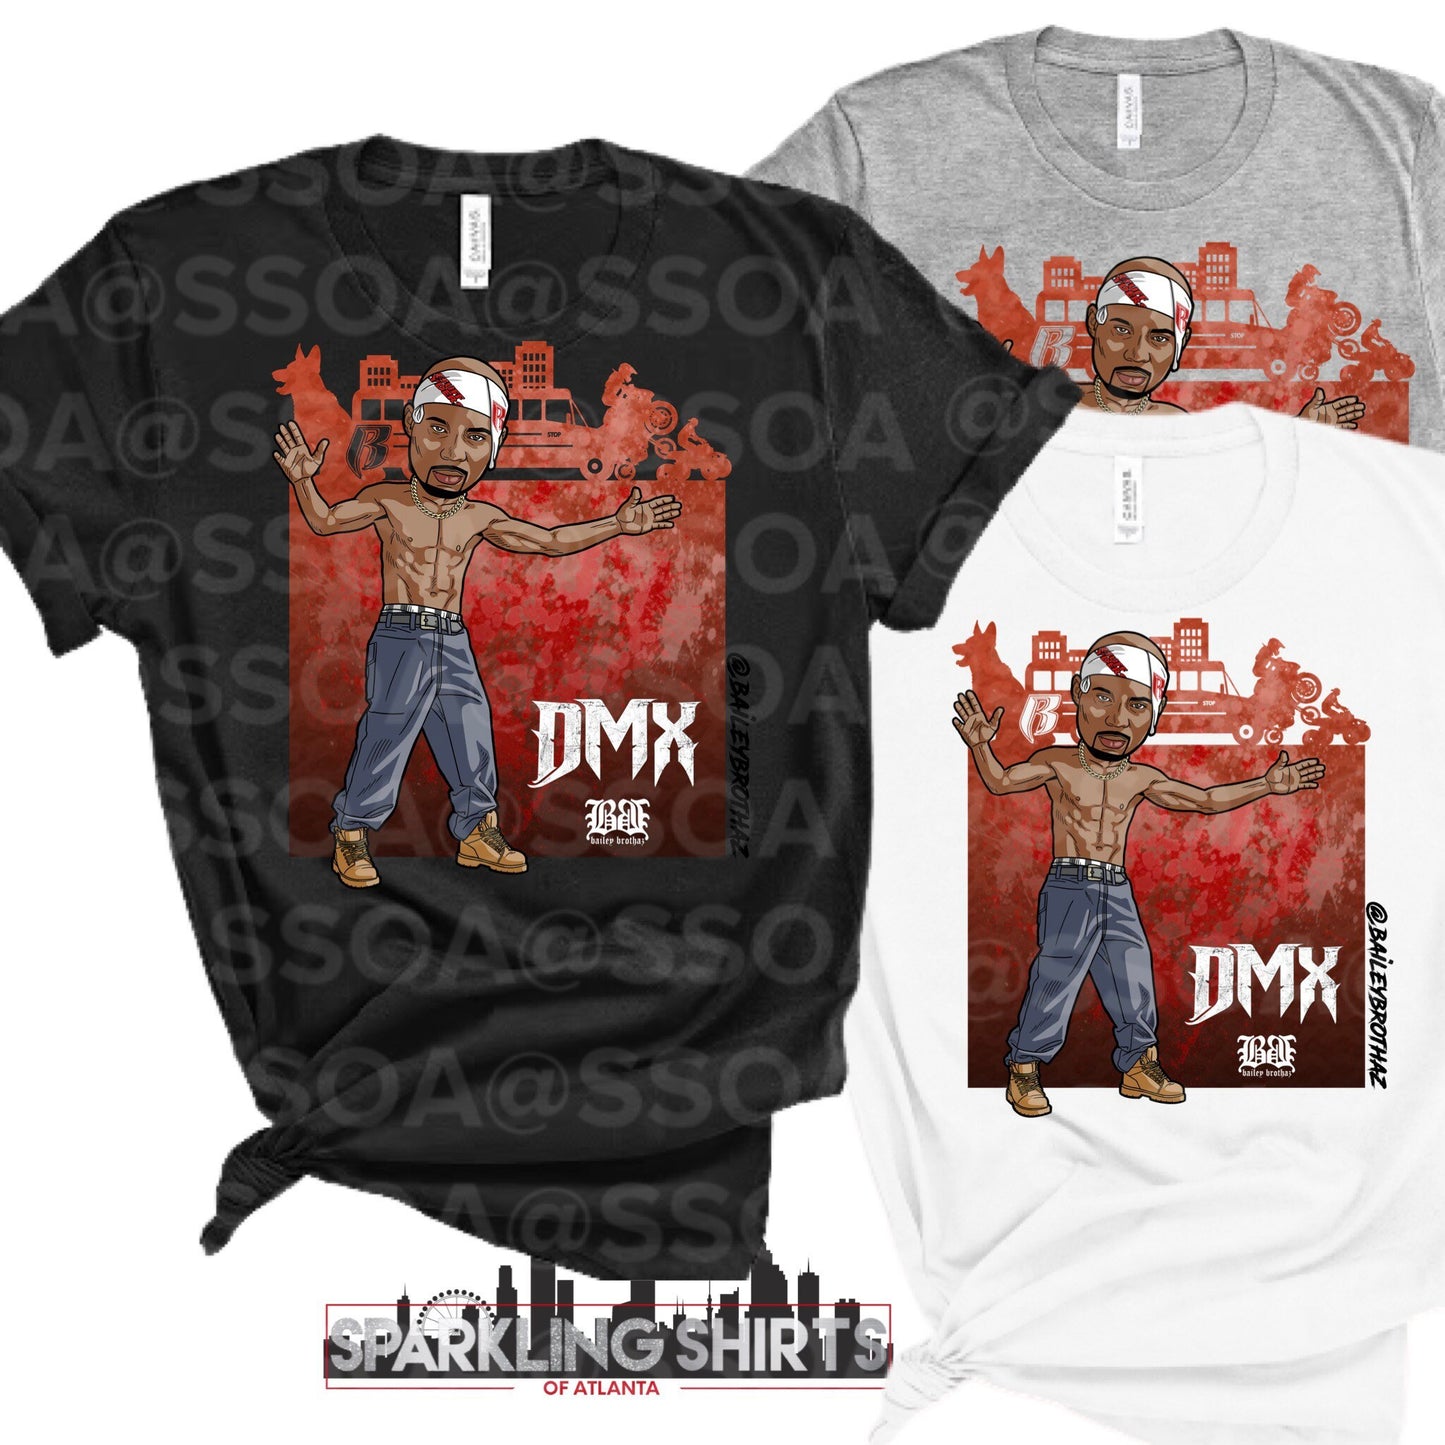 DMX| Music| Rap| Fun T-shirts | Everyday| Graphic T-shirt